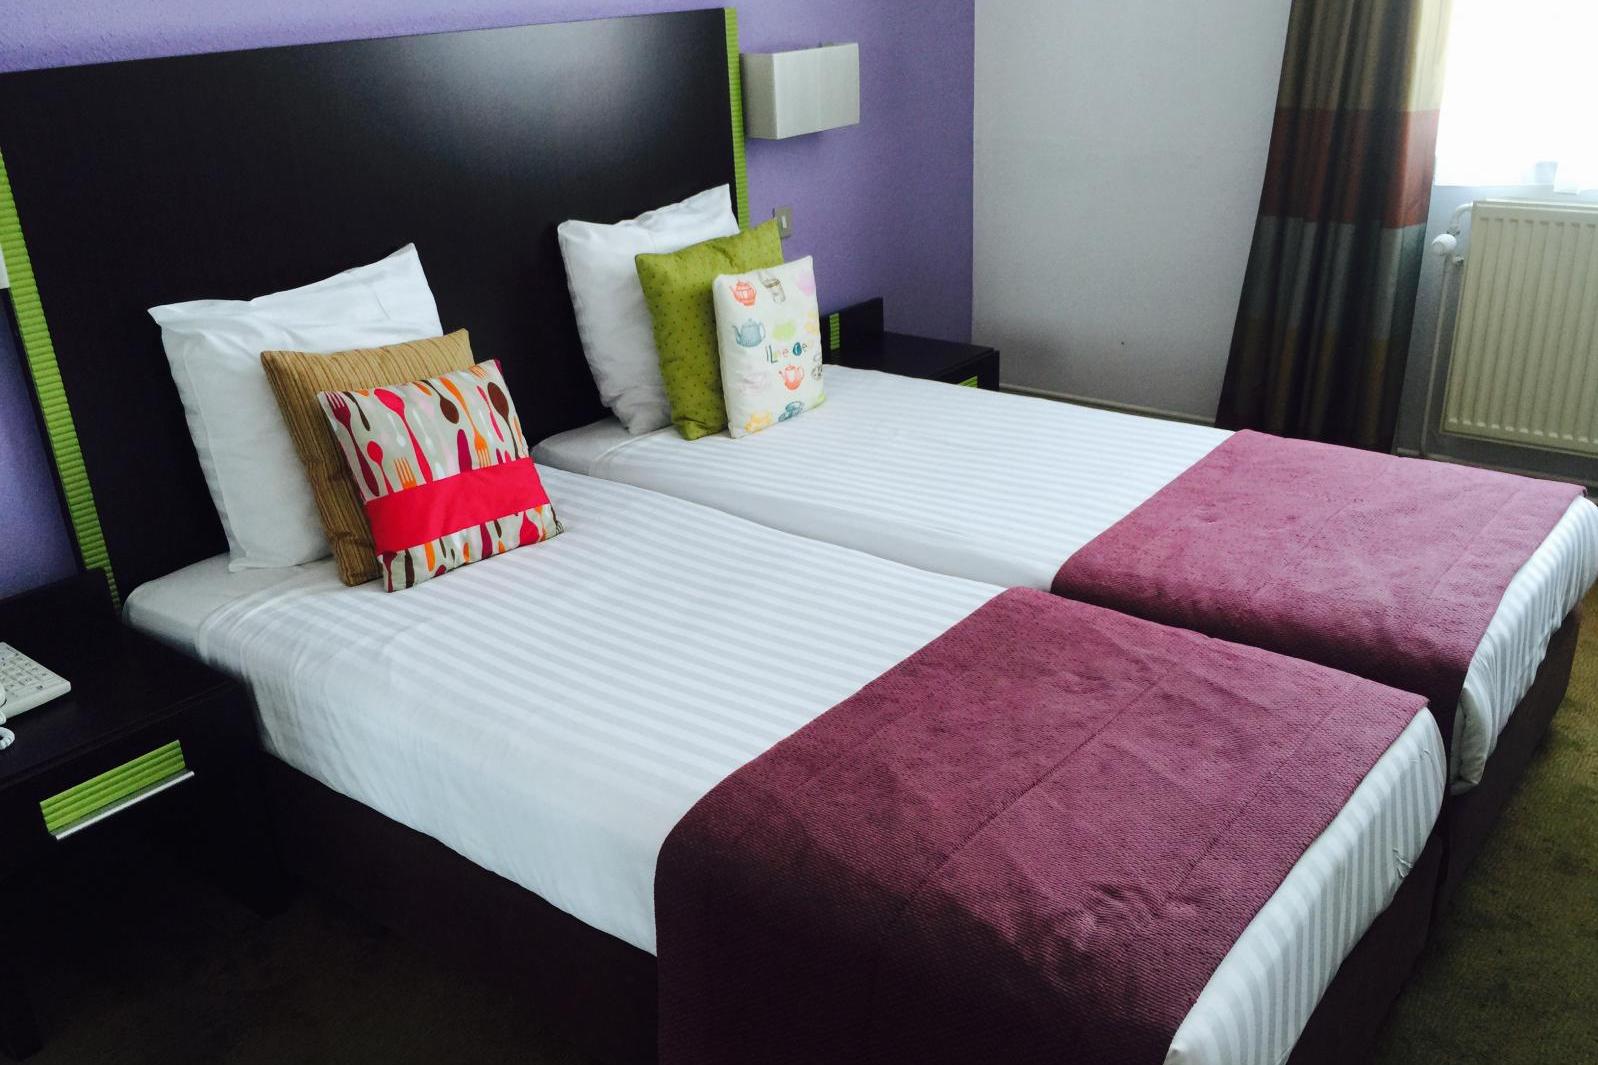 Superior twin room - Floris hotel Arlequin